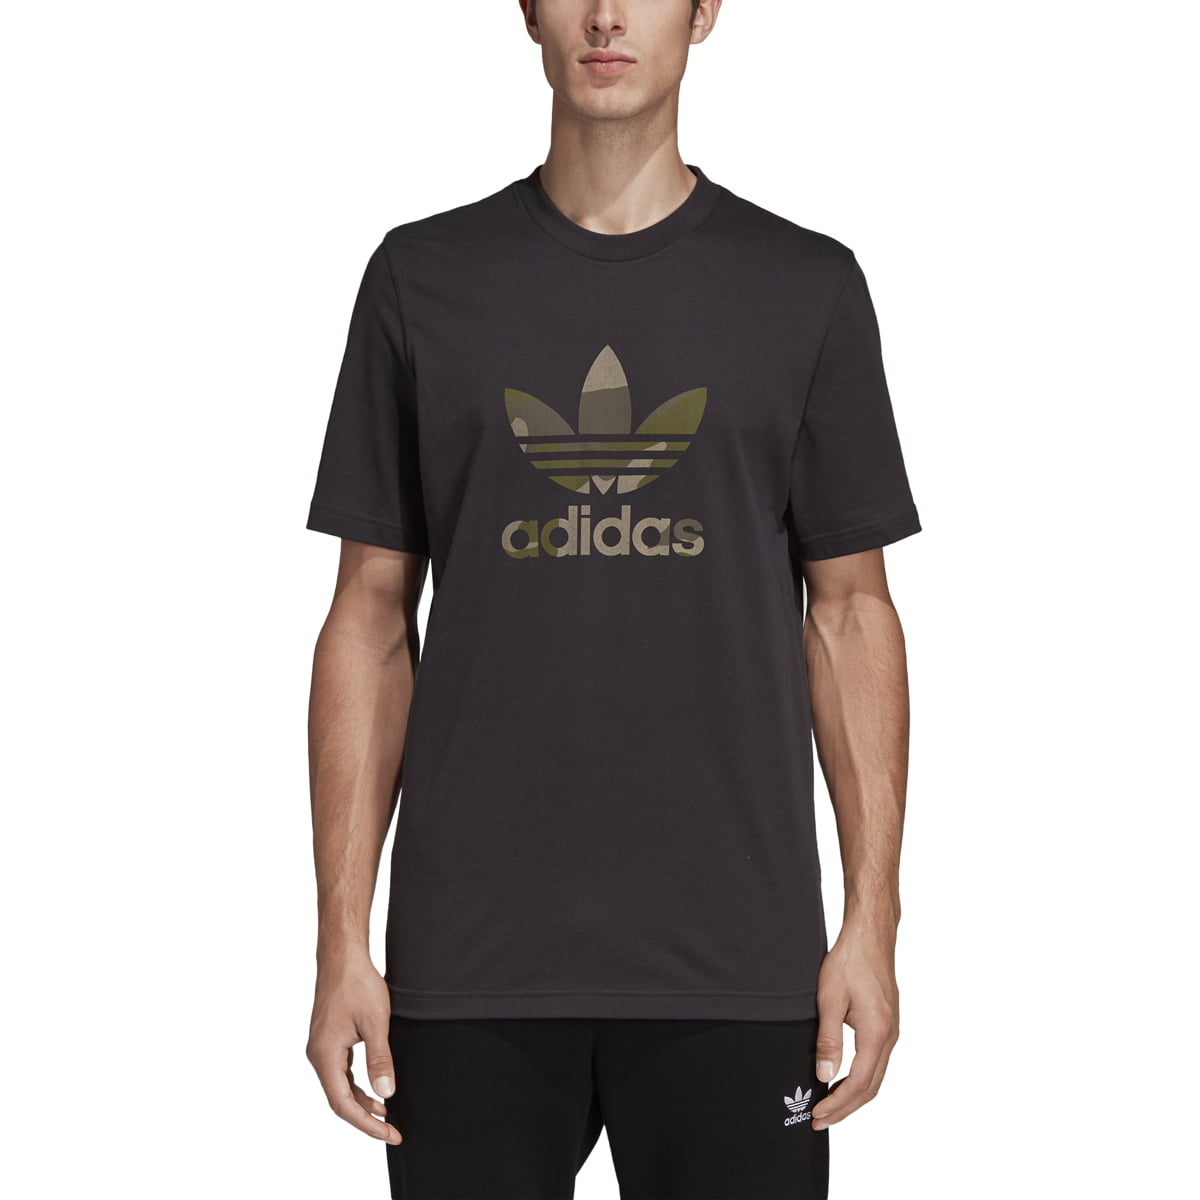 Adidas - Adidas Men's T-Shirts Camouflage Trefoil Short Sleeve Crew ...